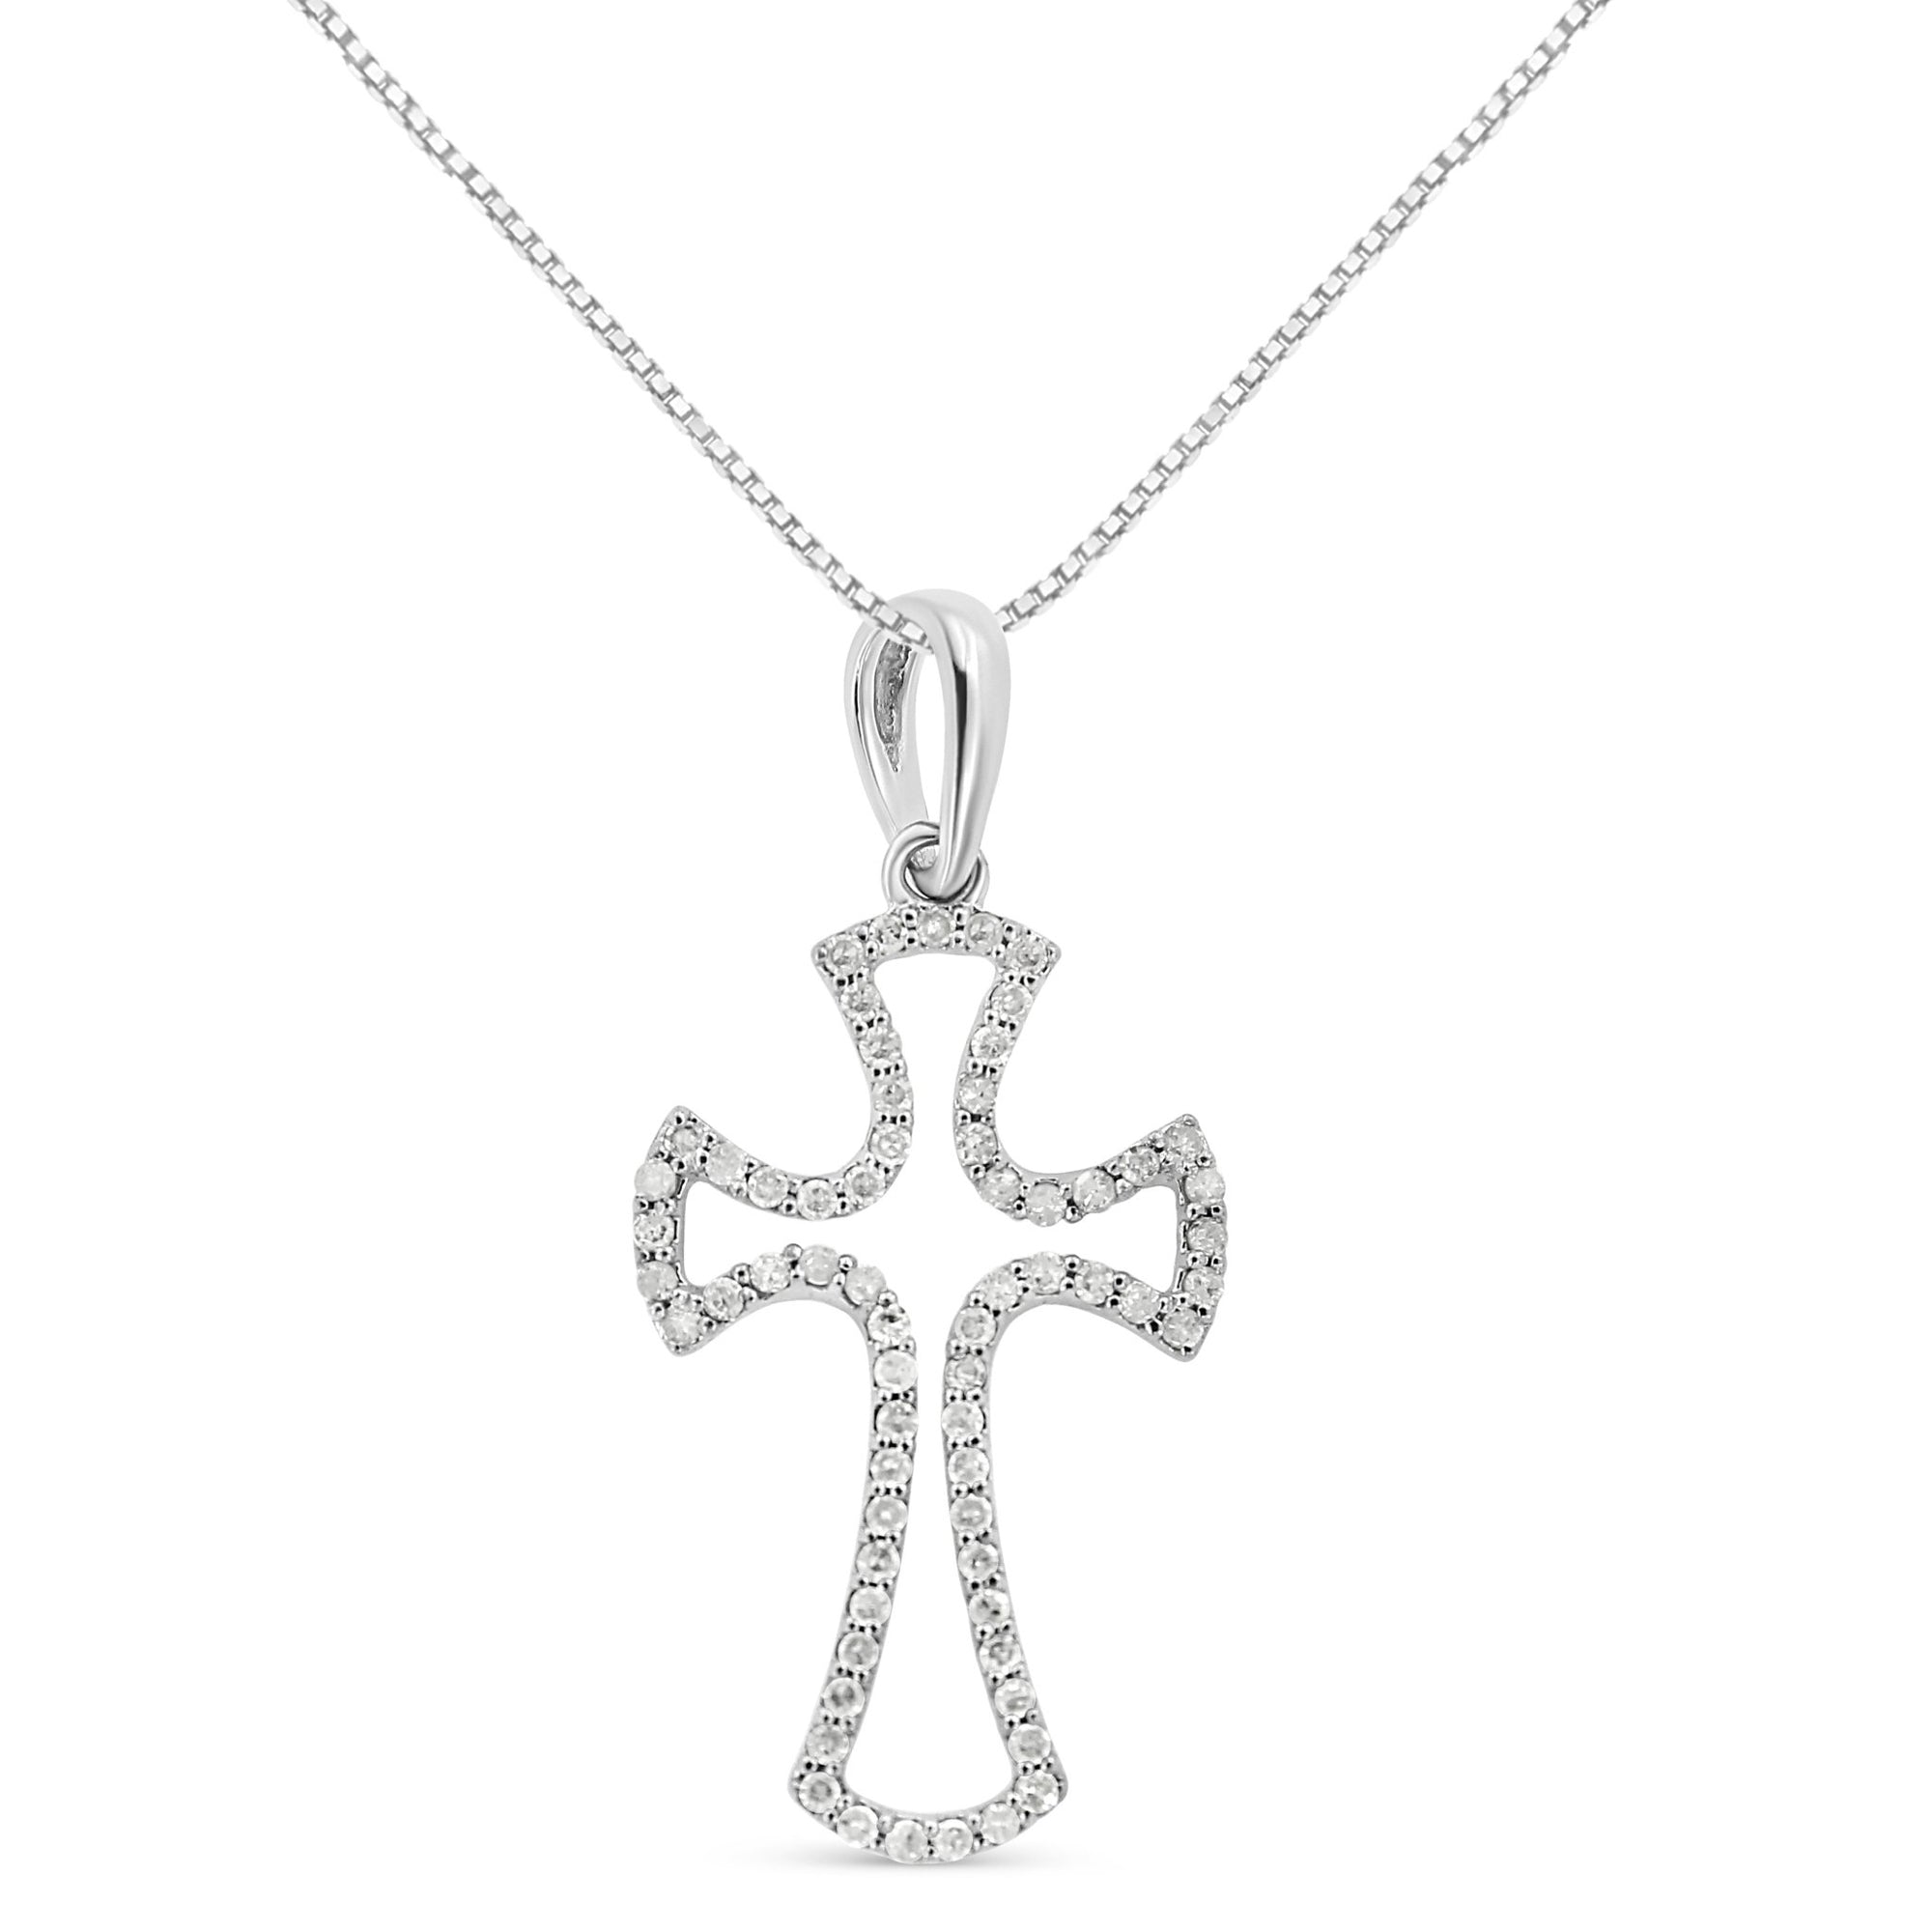 .925 Sterling Silver 1/3 Cttw Diamond Framed Open Cross 18" Pendant Necklace (J-K Color, I2-I3 Clarity) - LinkagejewelrydesignLinkagejewelrydesign